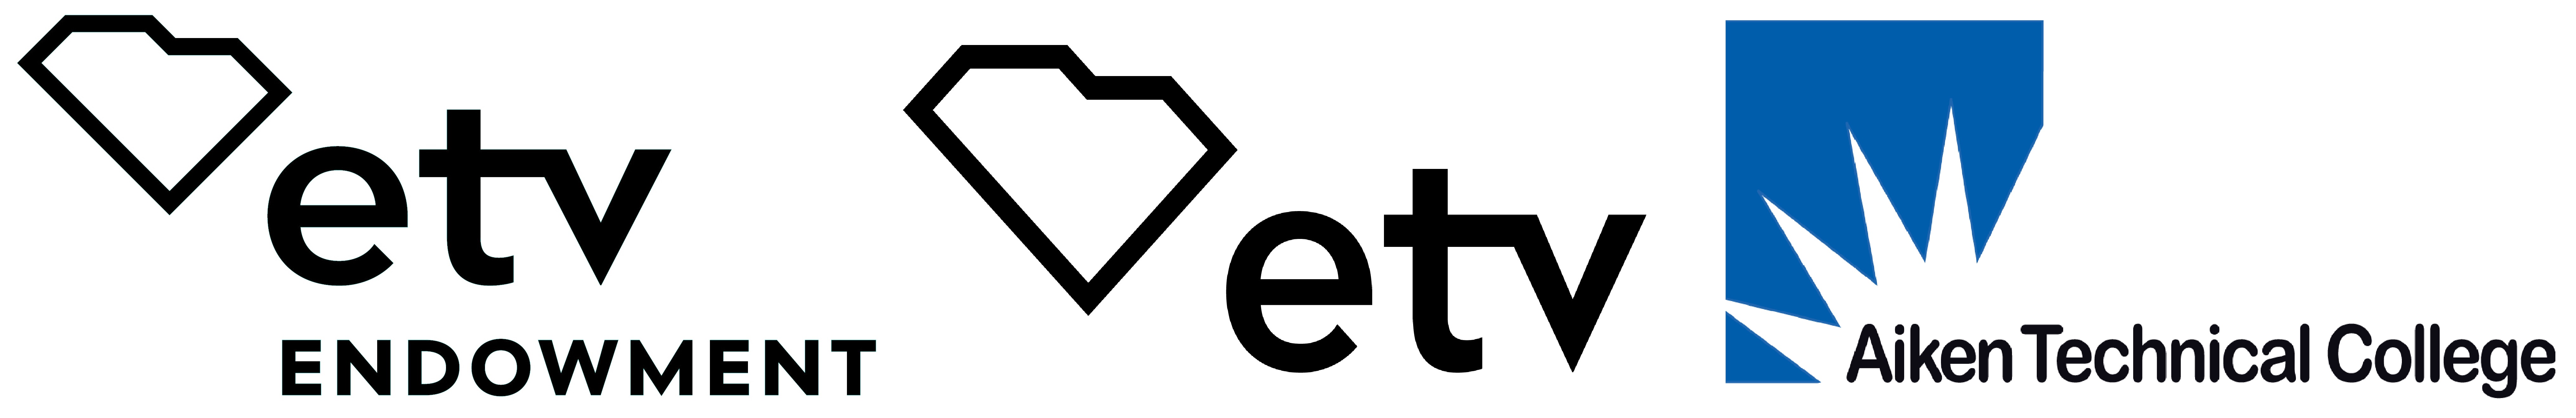 Endowment.ETV.ATC logos